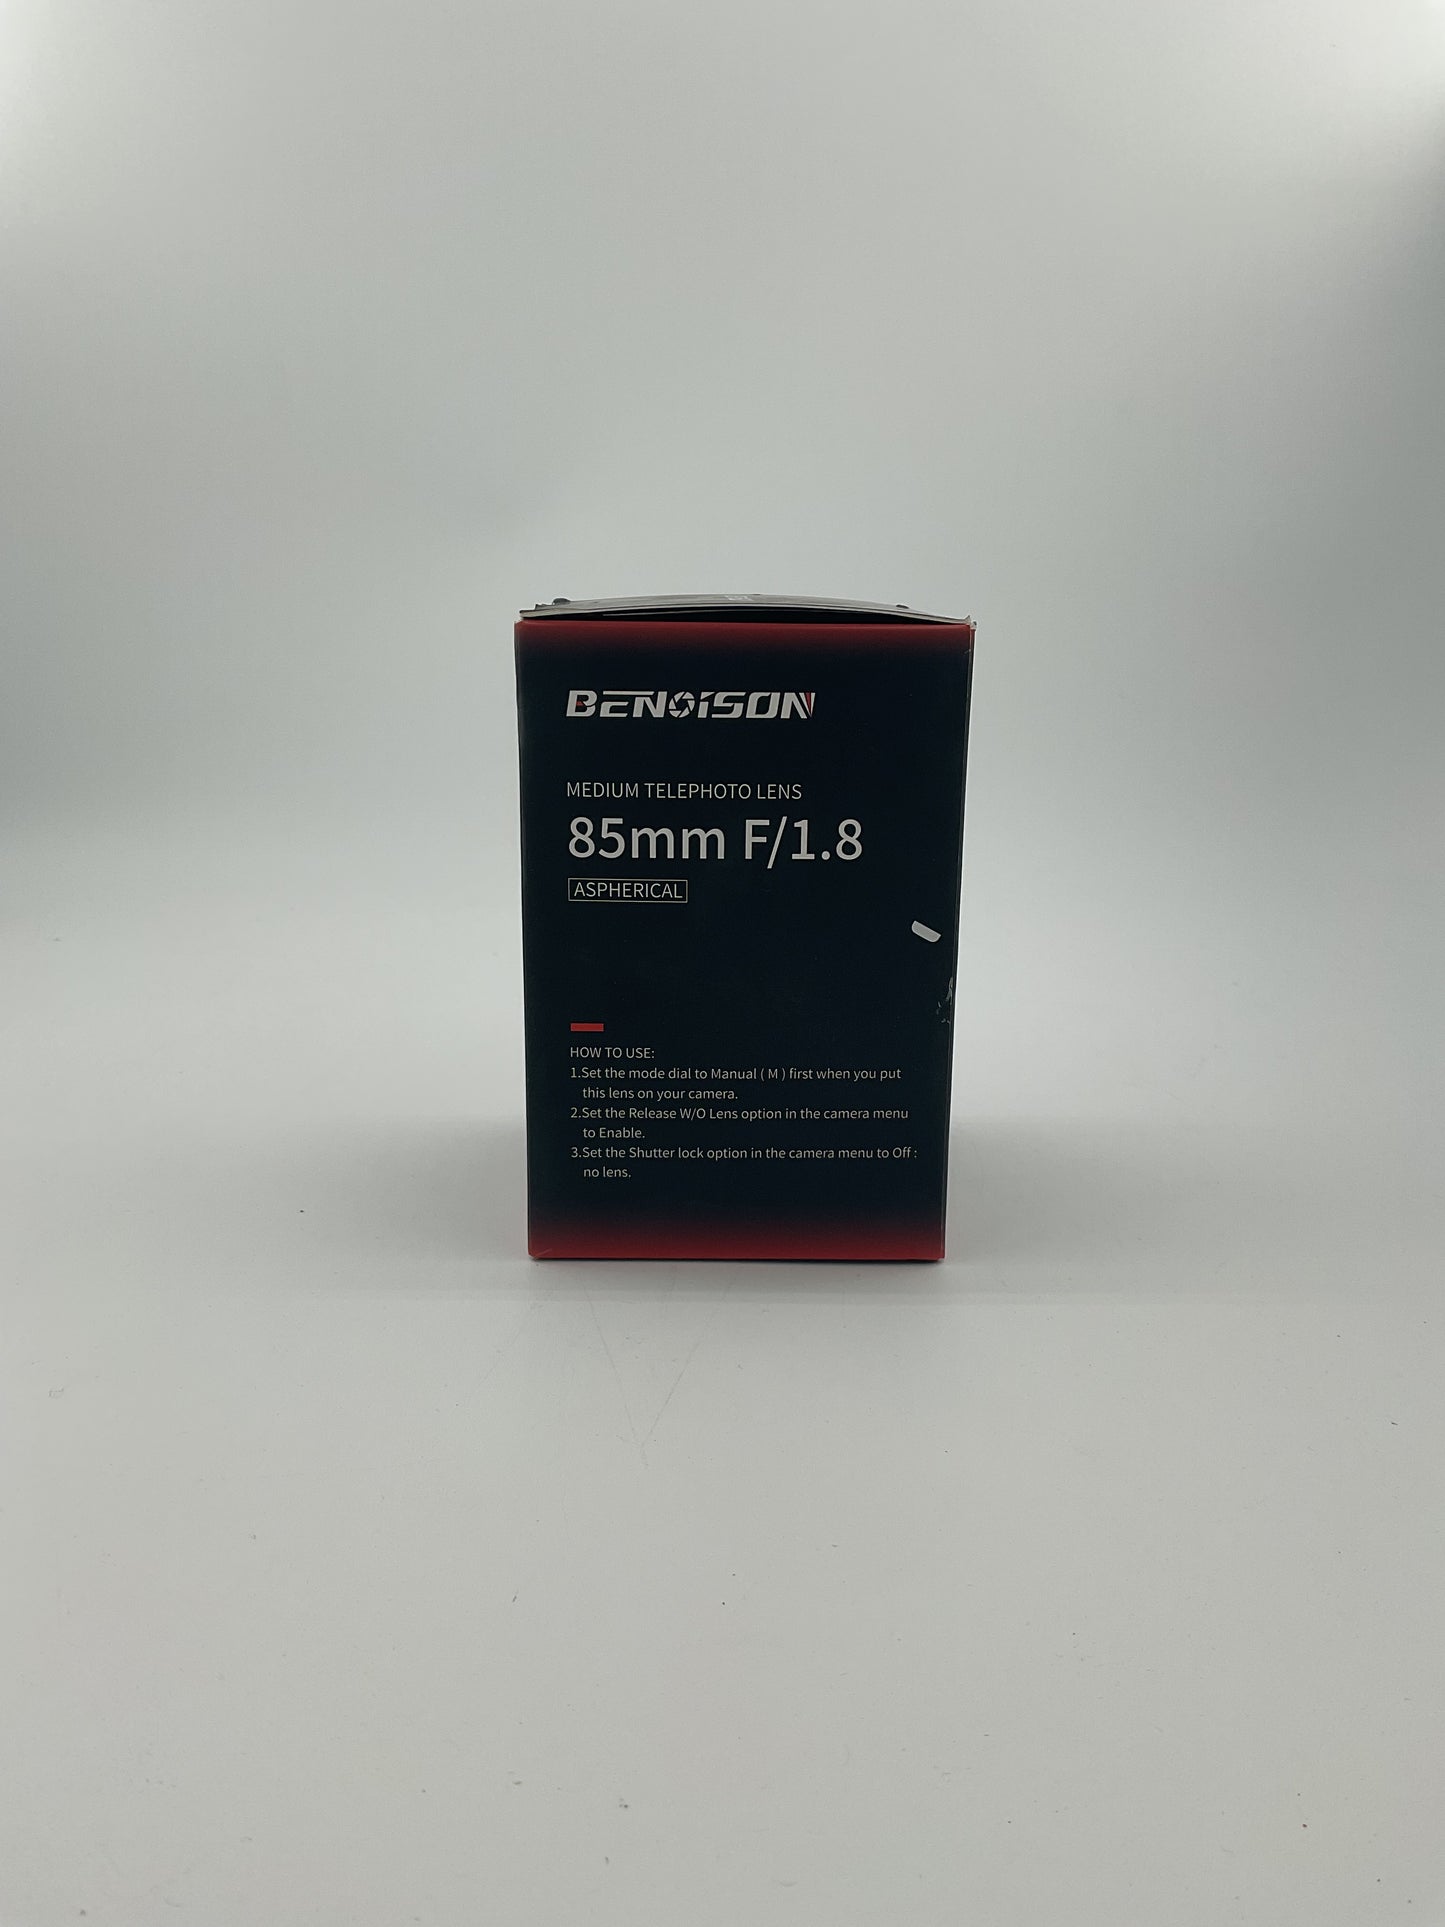 Benoison Medium Telephoto Lens 85mm F/1.8 Aspherical